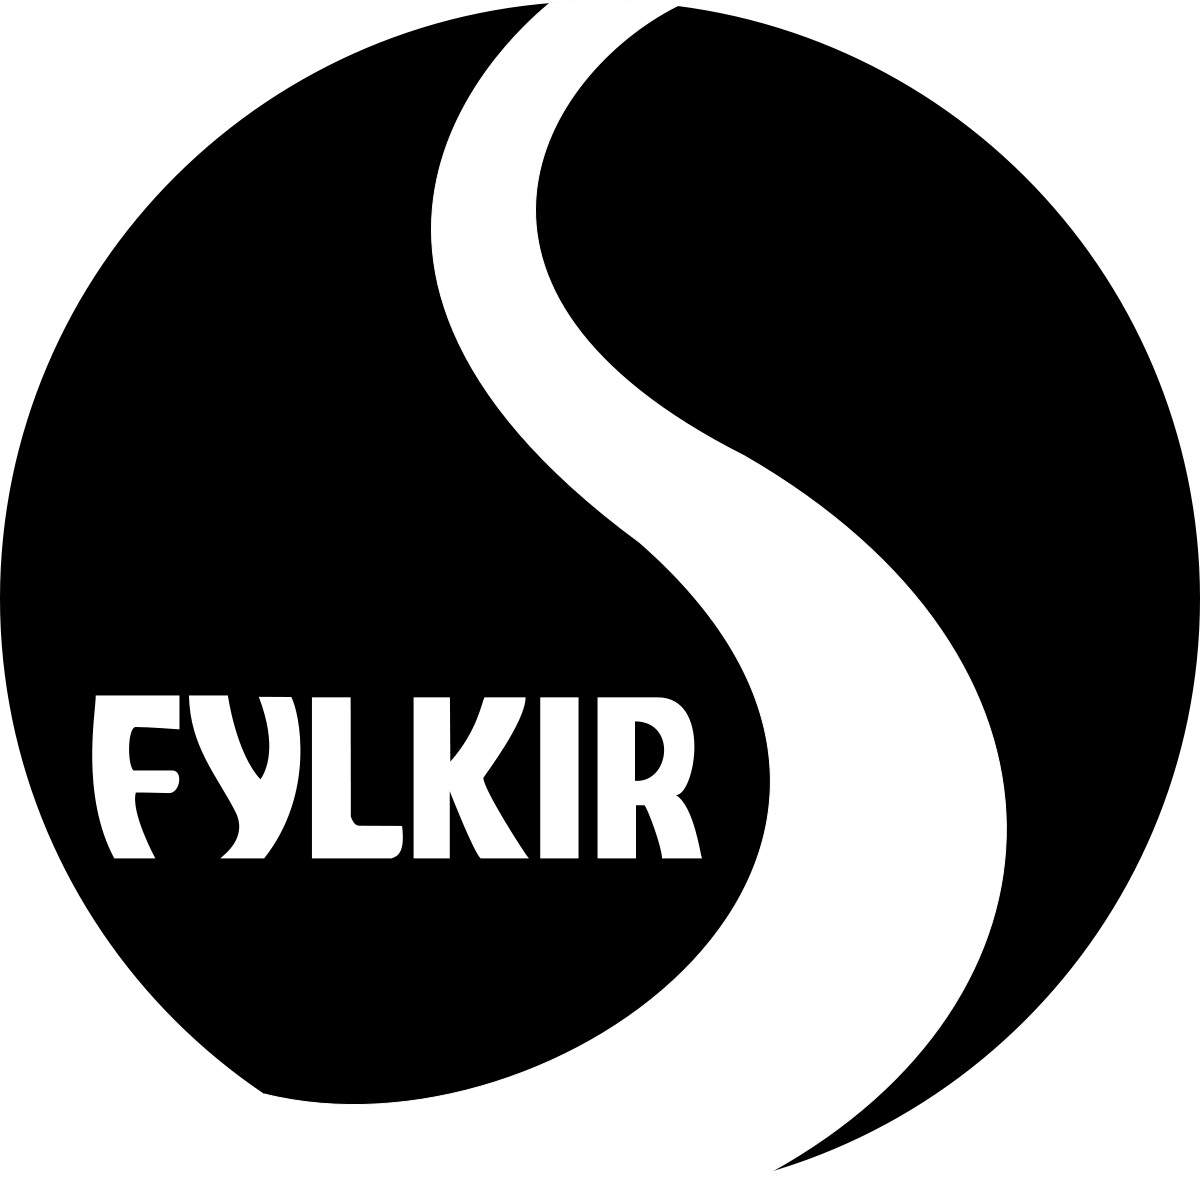 費基爾 logo